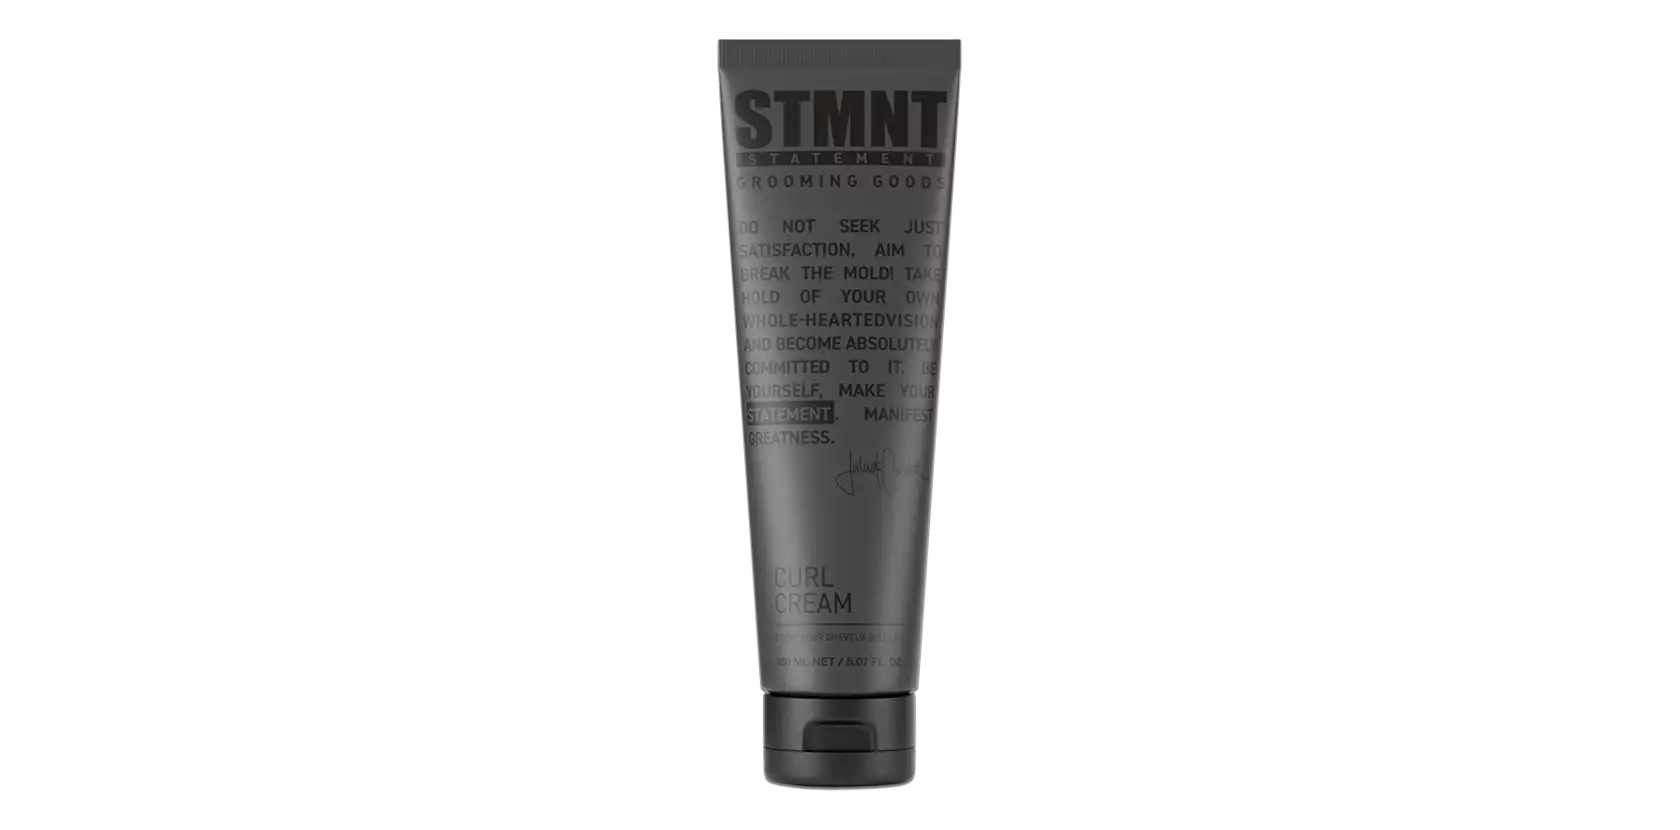 STMNT Curl Cream